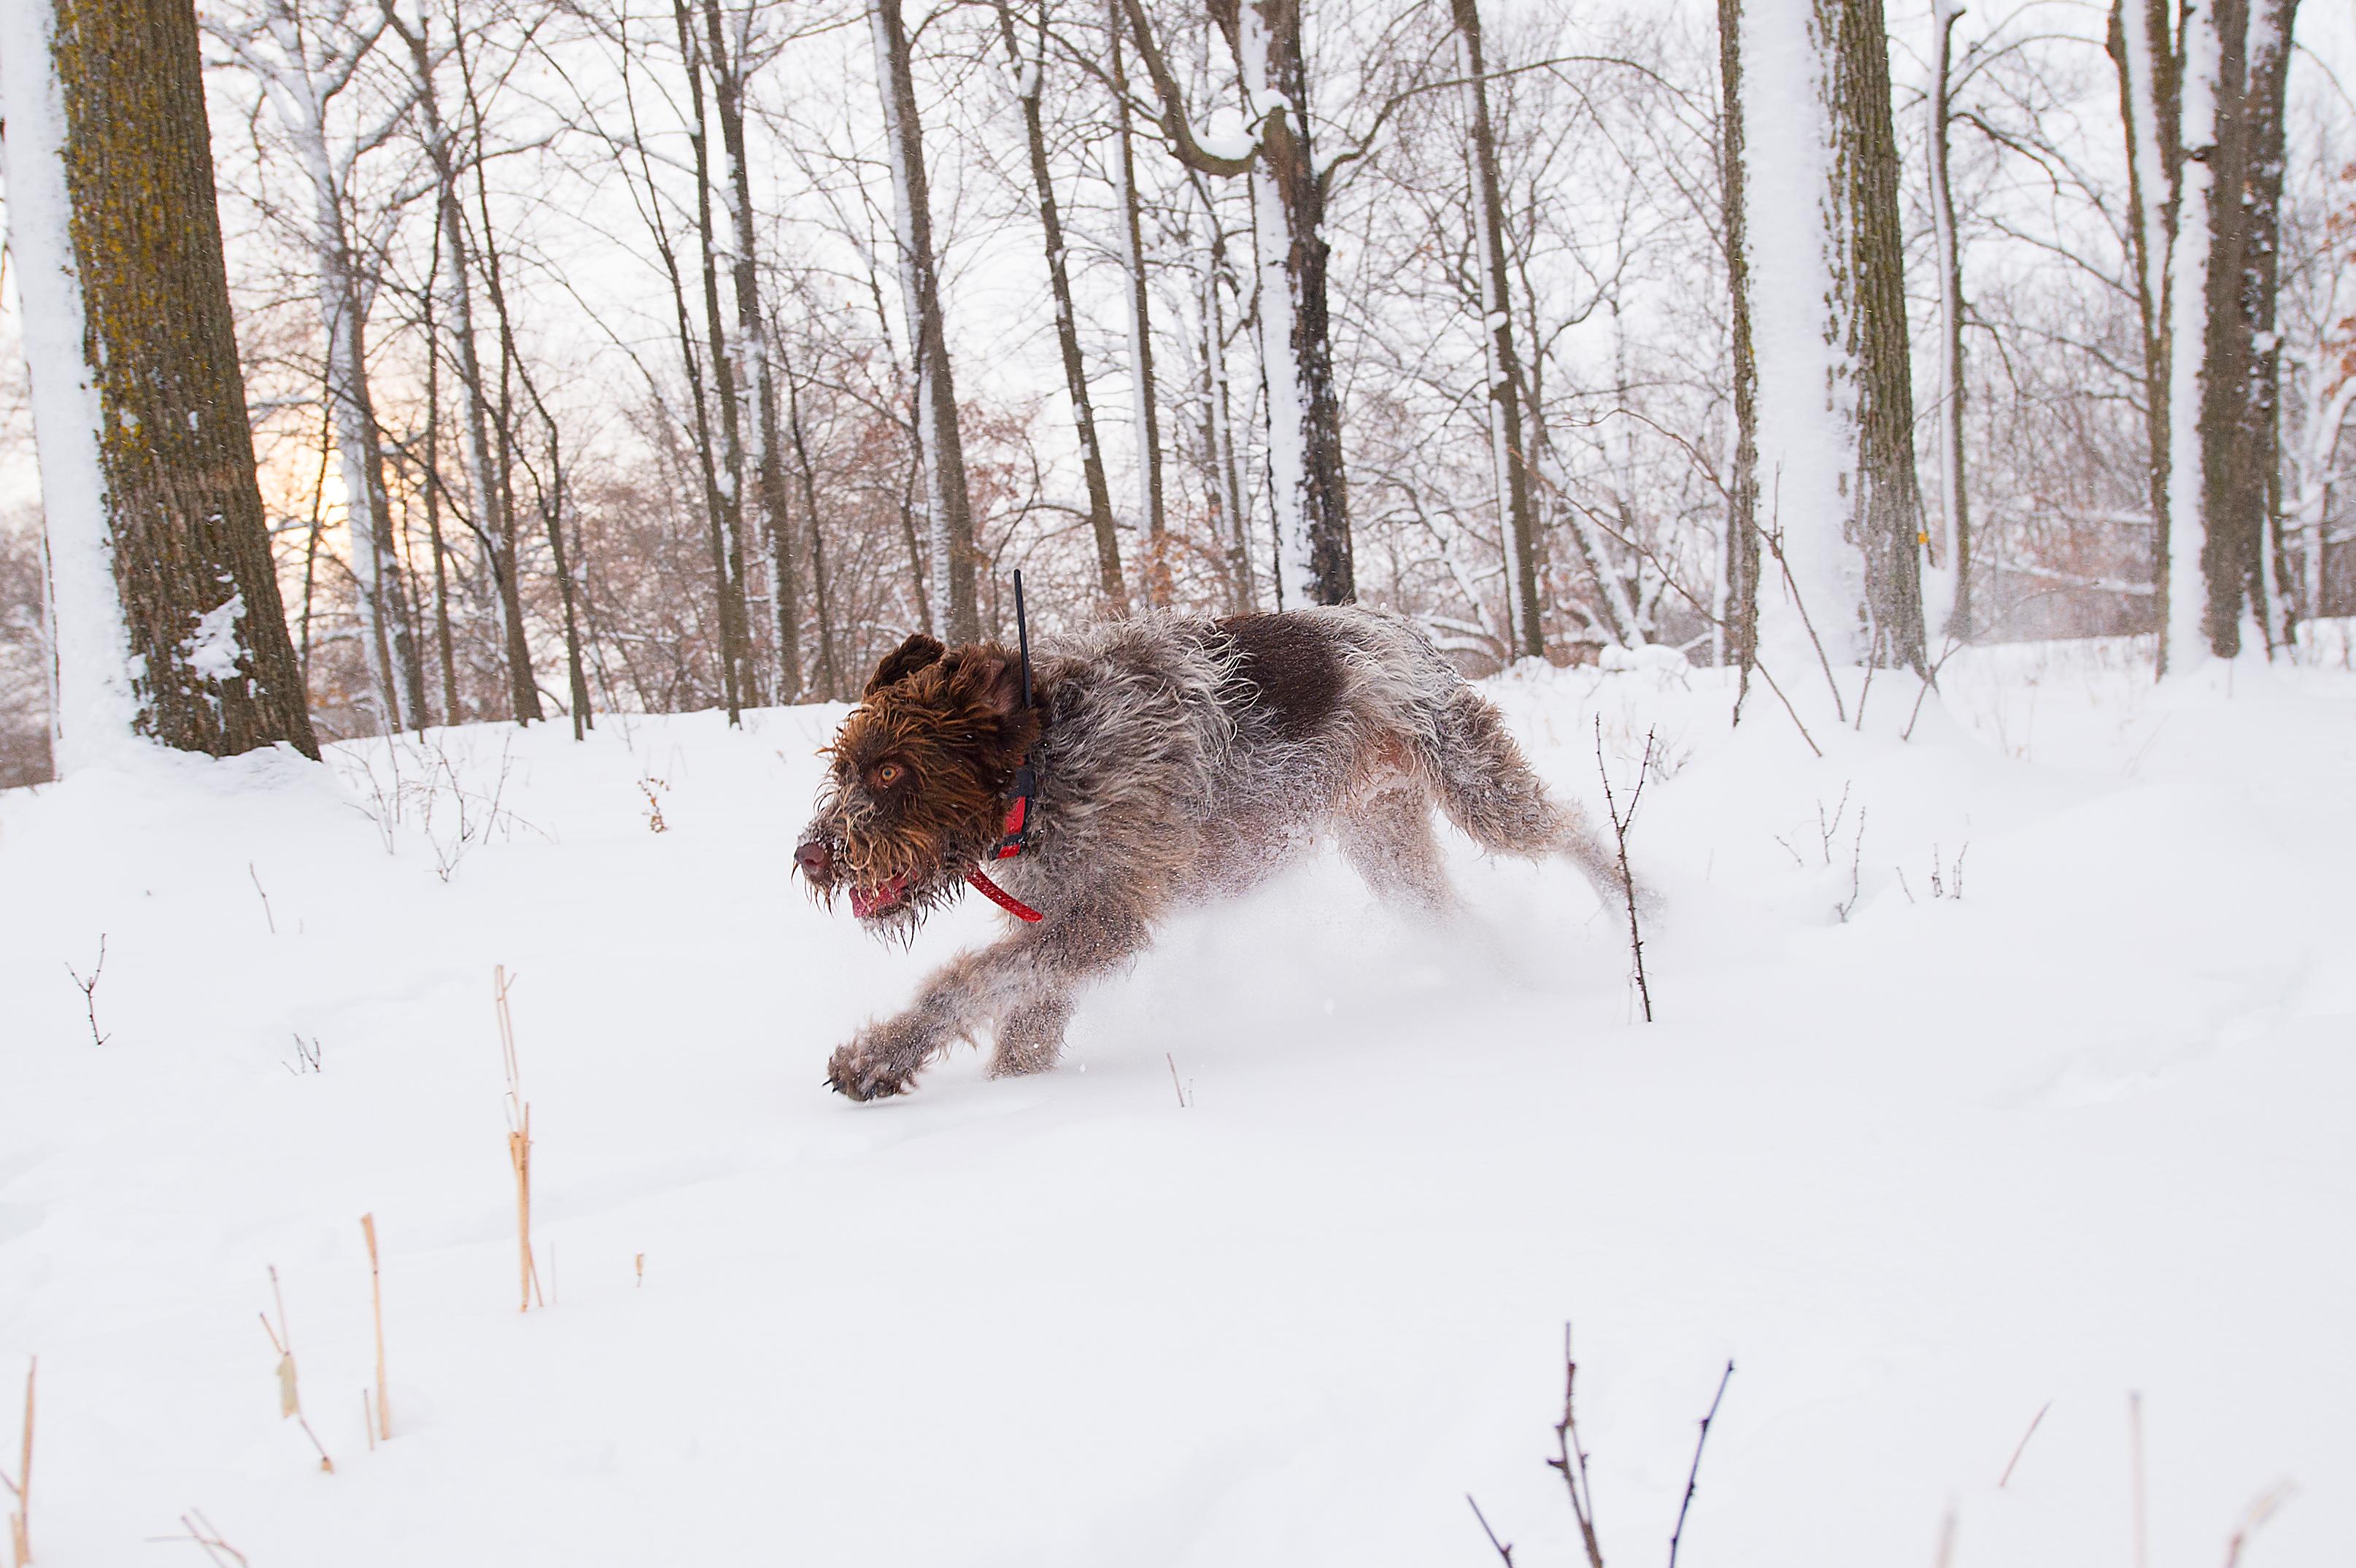 Draathar running through snow